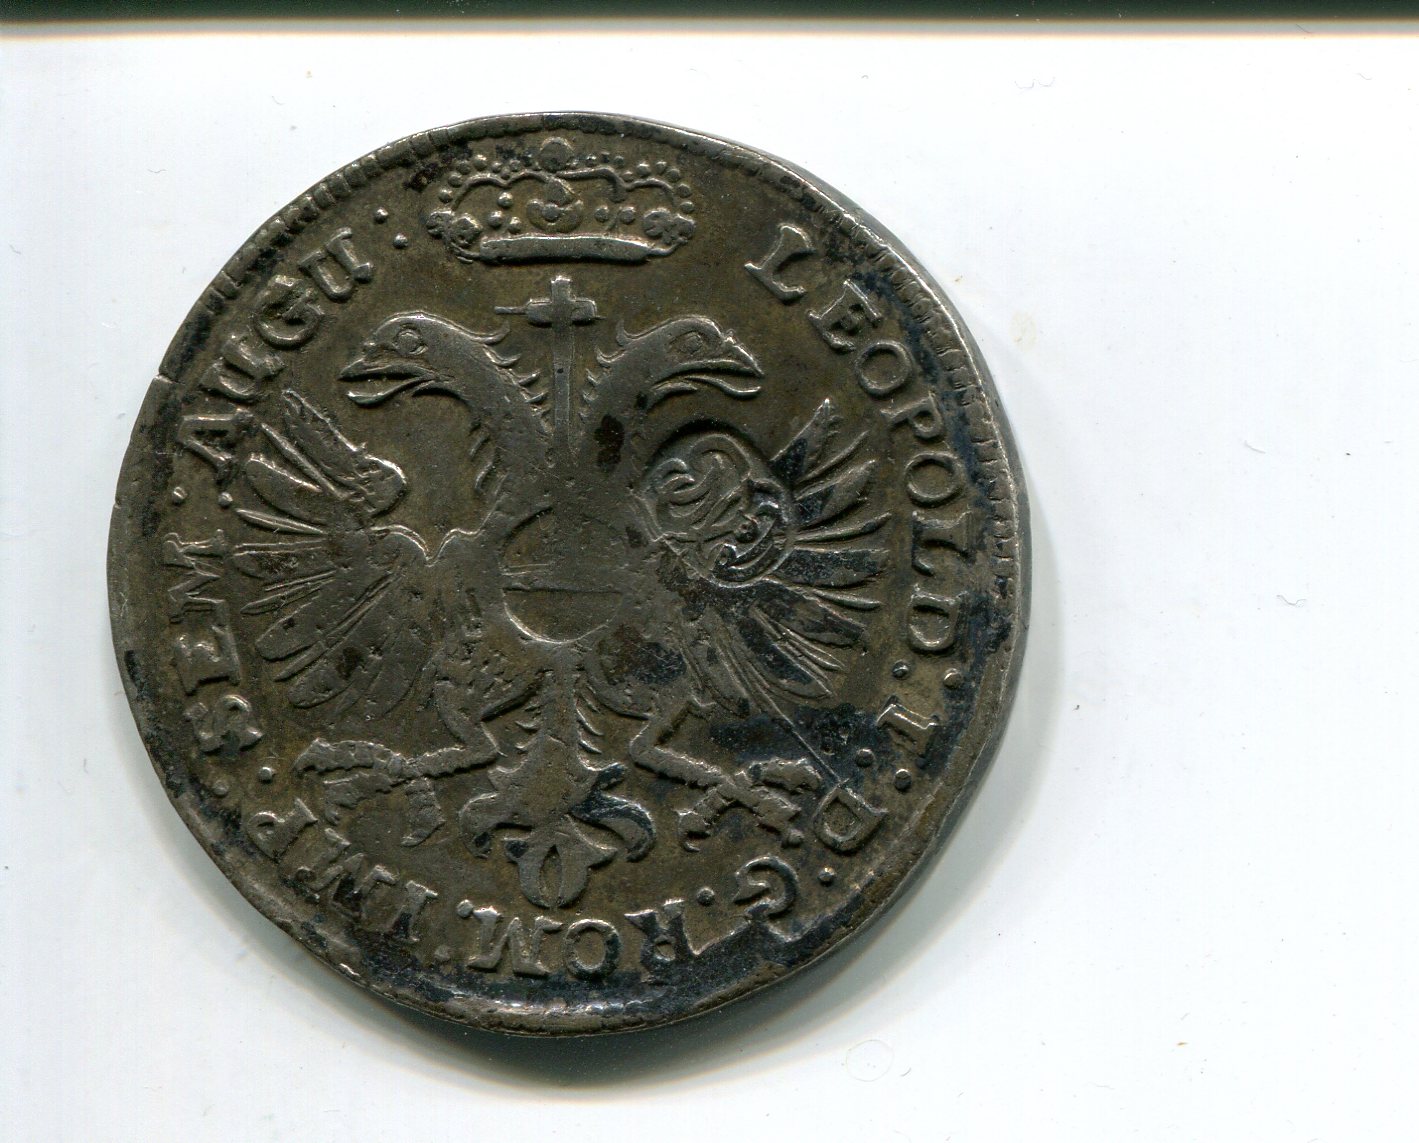 Koln coln cm on Emden Gulden 1688 rev 210.jpg